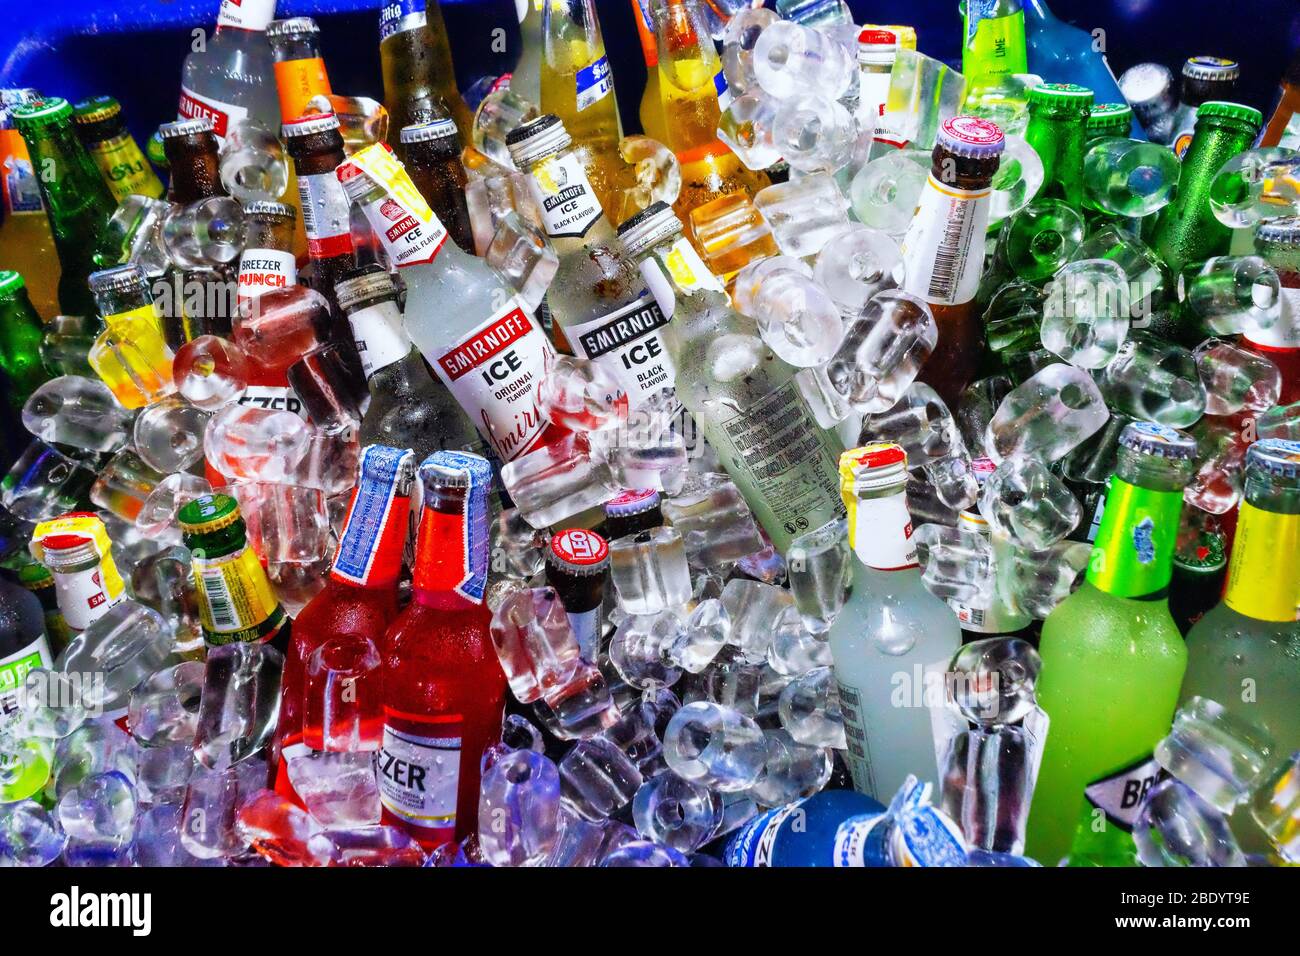 Large selection of bottled alcoholic drinks chilled in ice. Thailand, Bangkok, 2020-01-26 Stock Photo